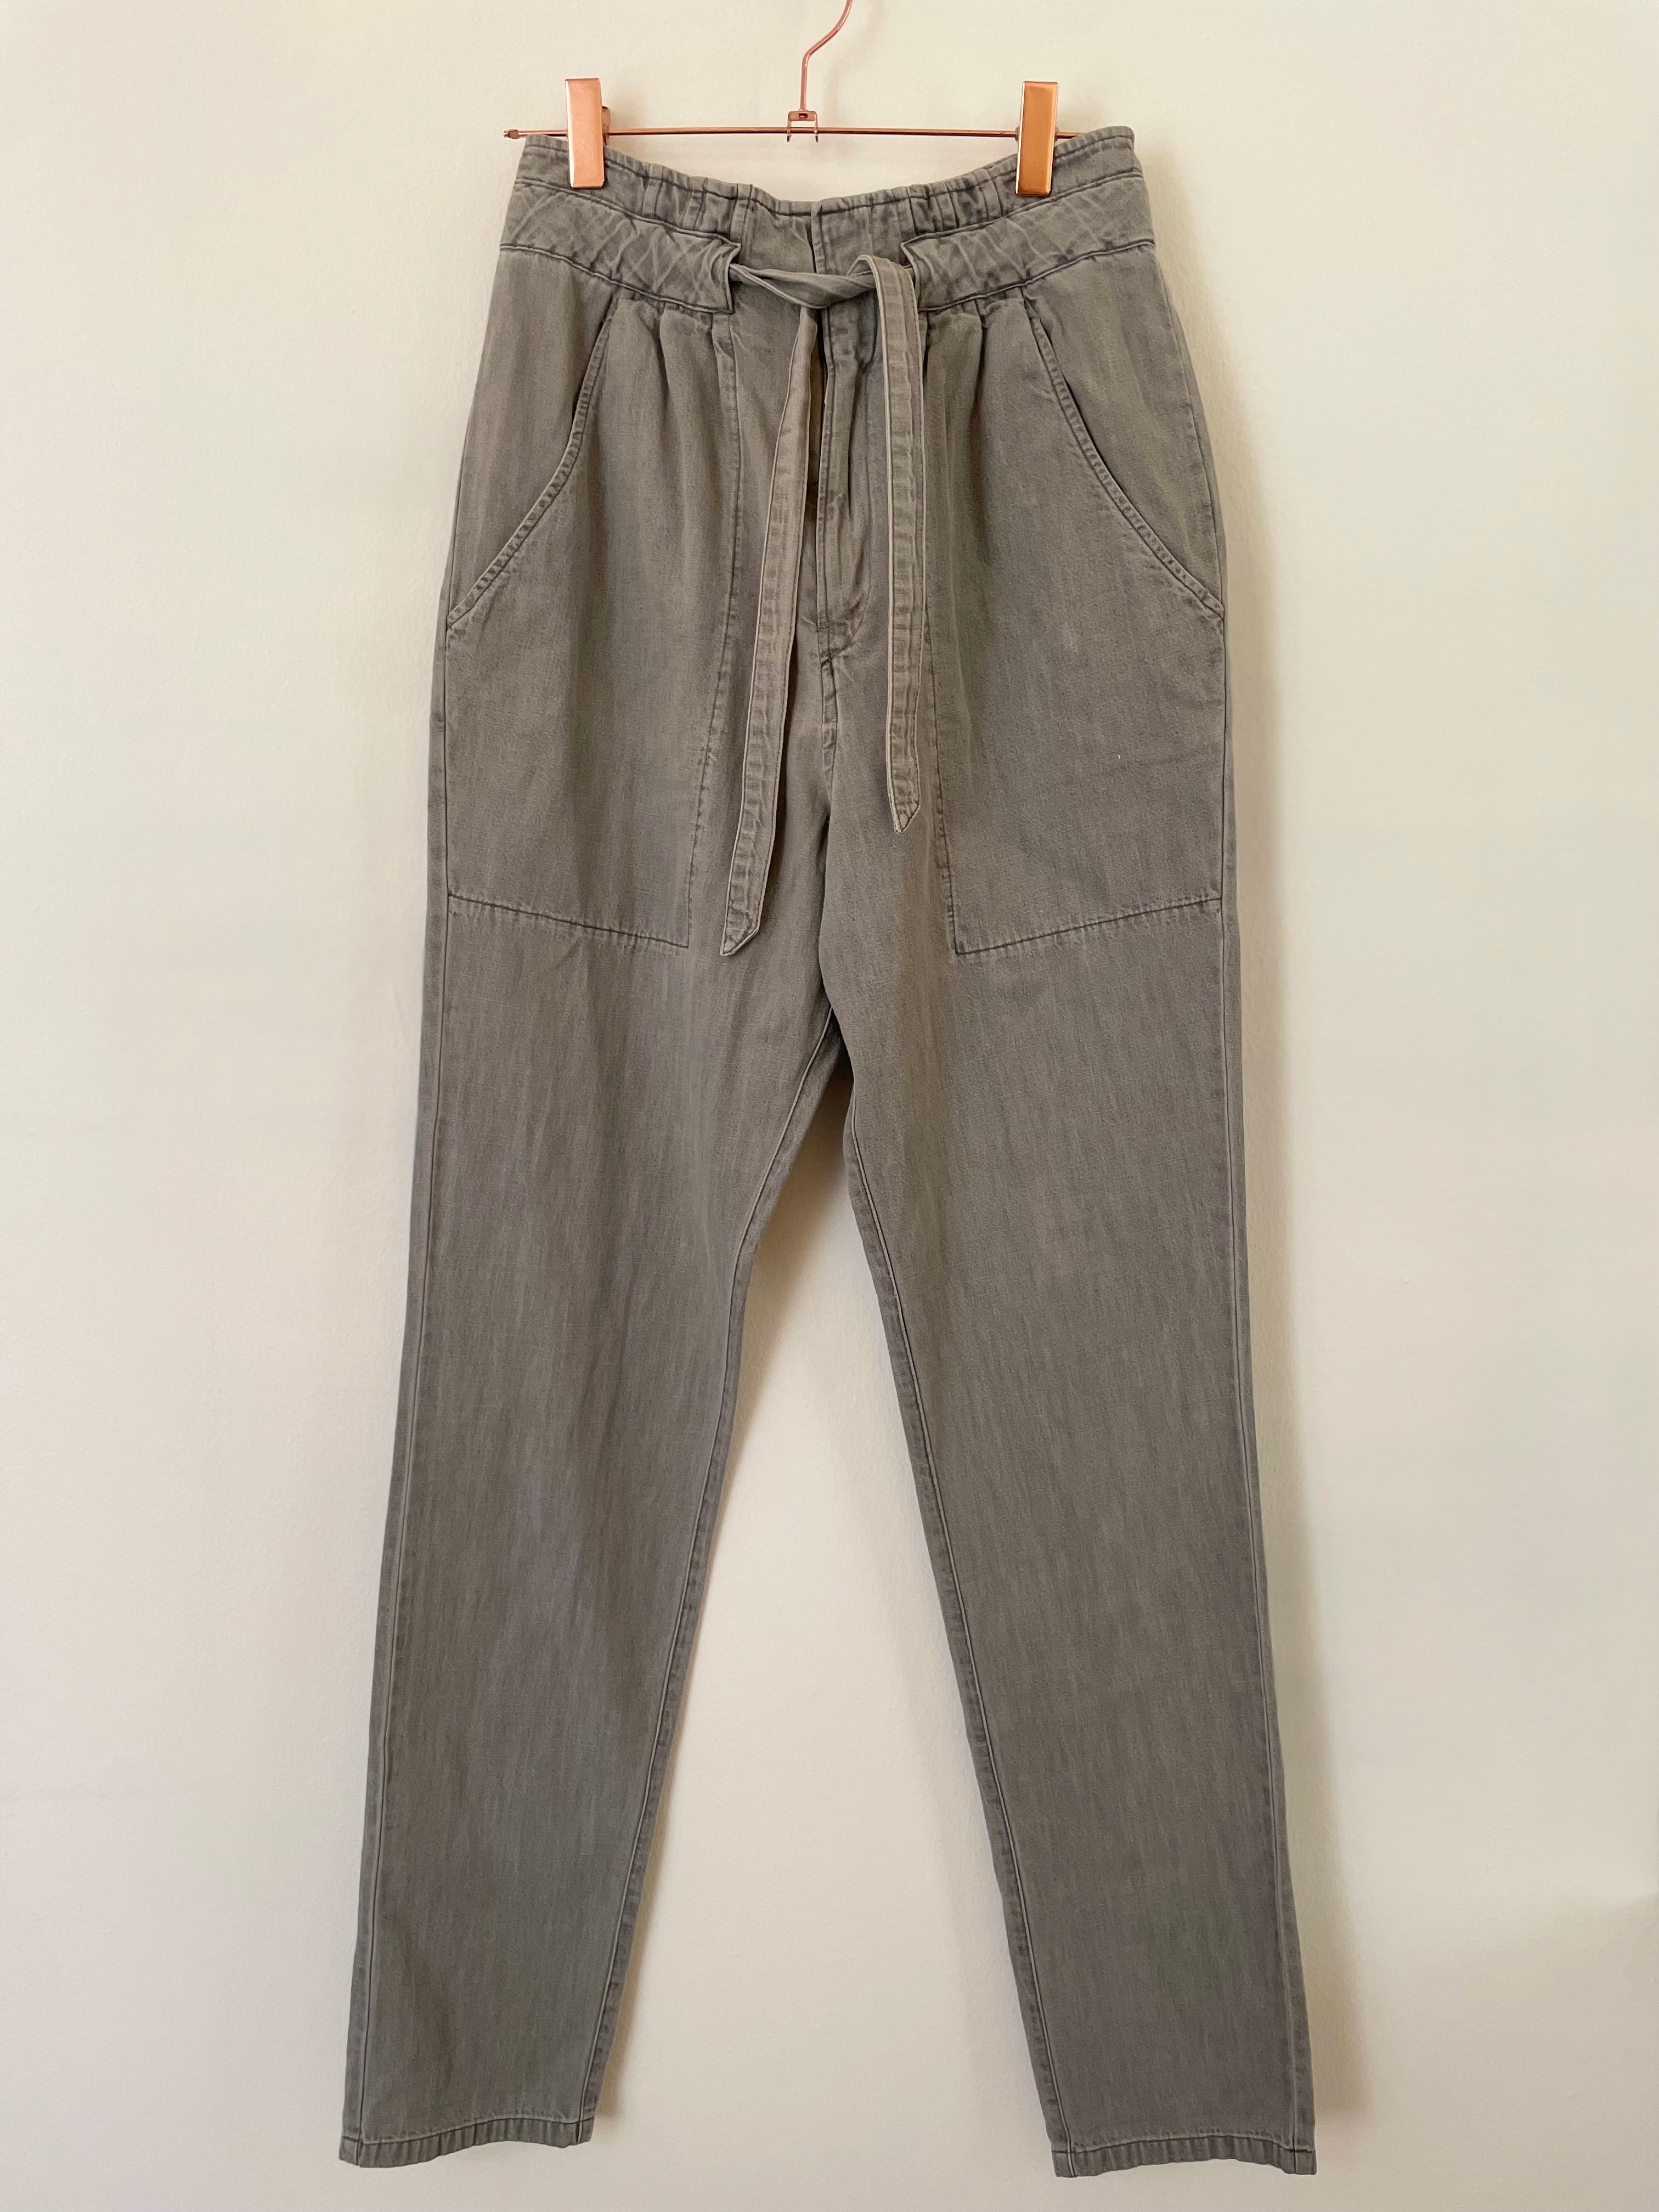 Grey denim trousers - ISABEL MARANT ETOILE - 34EU/UK6